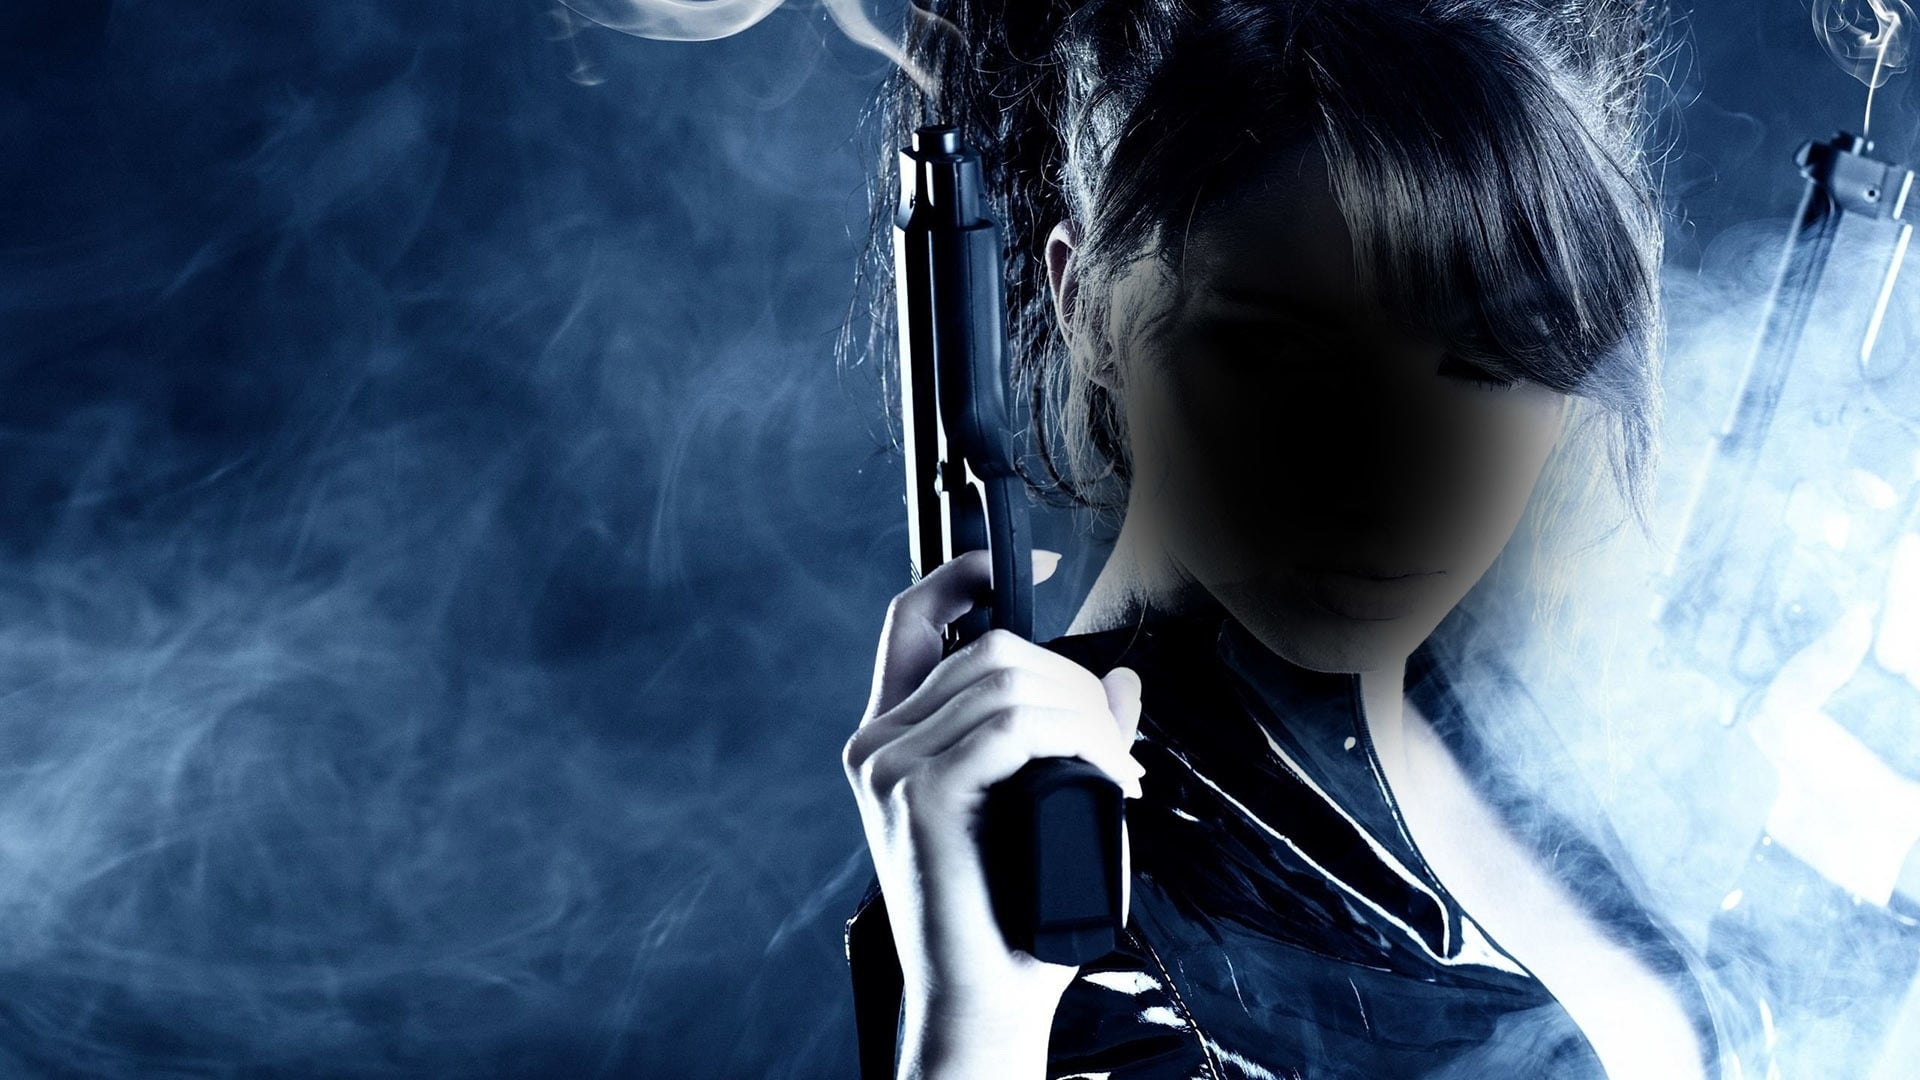 Gun Crazy: Episode 4: Requiem for a Bodyguard